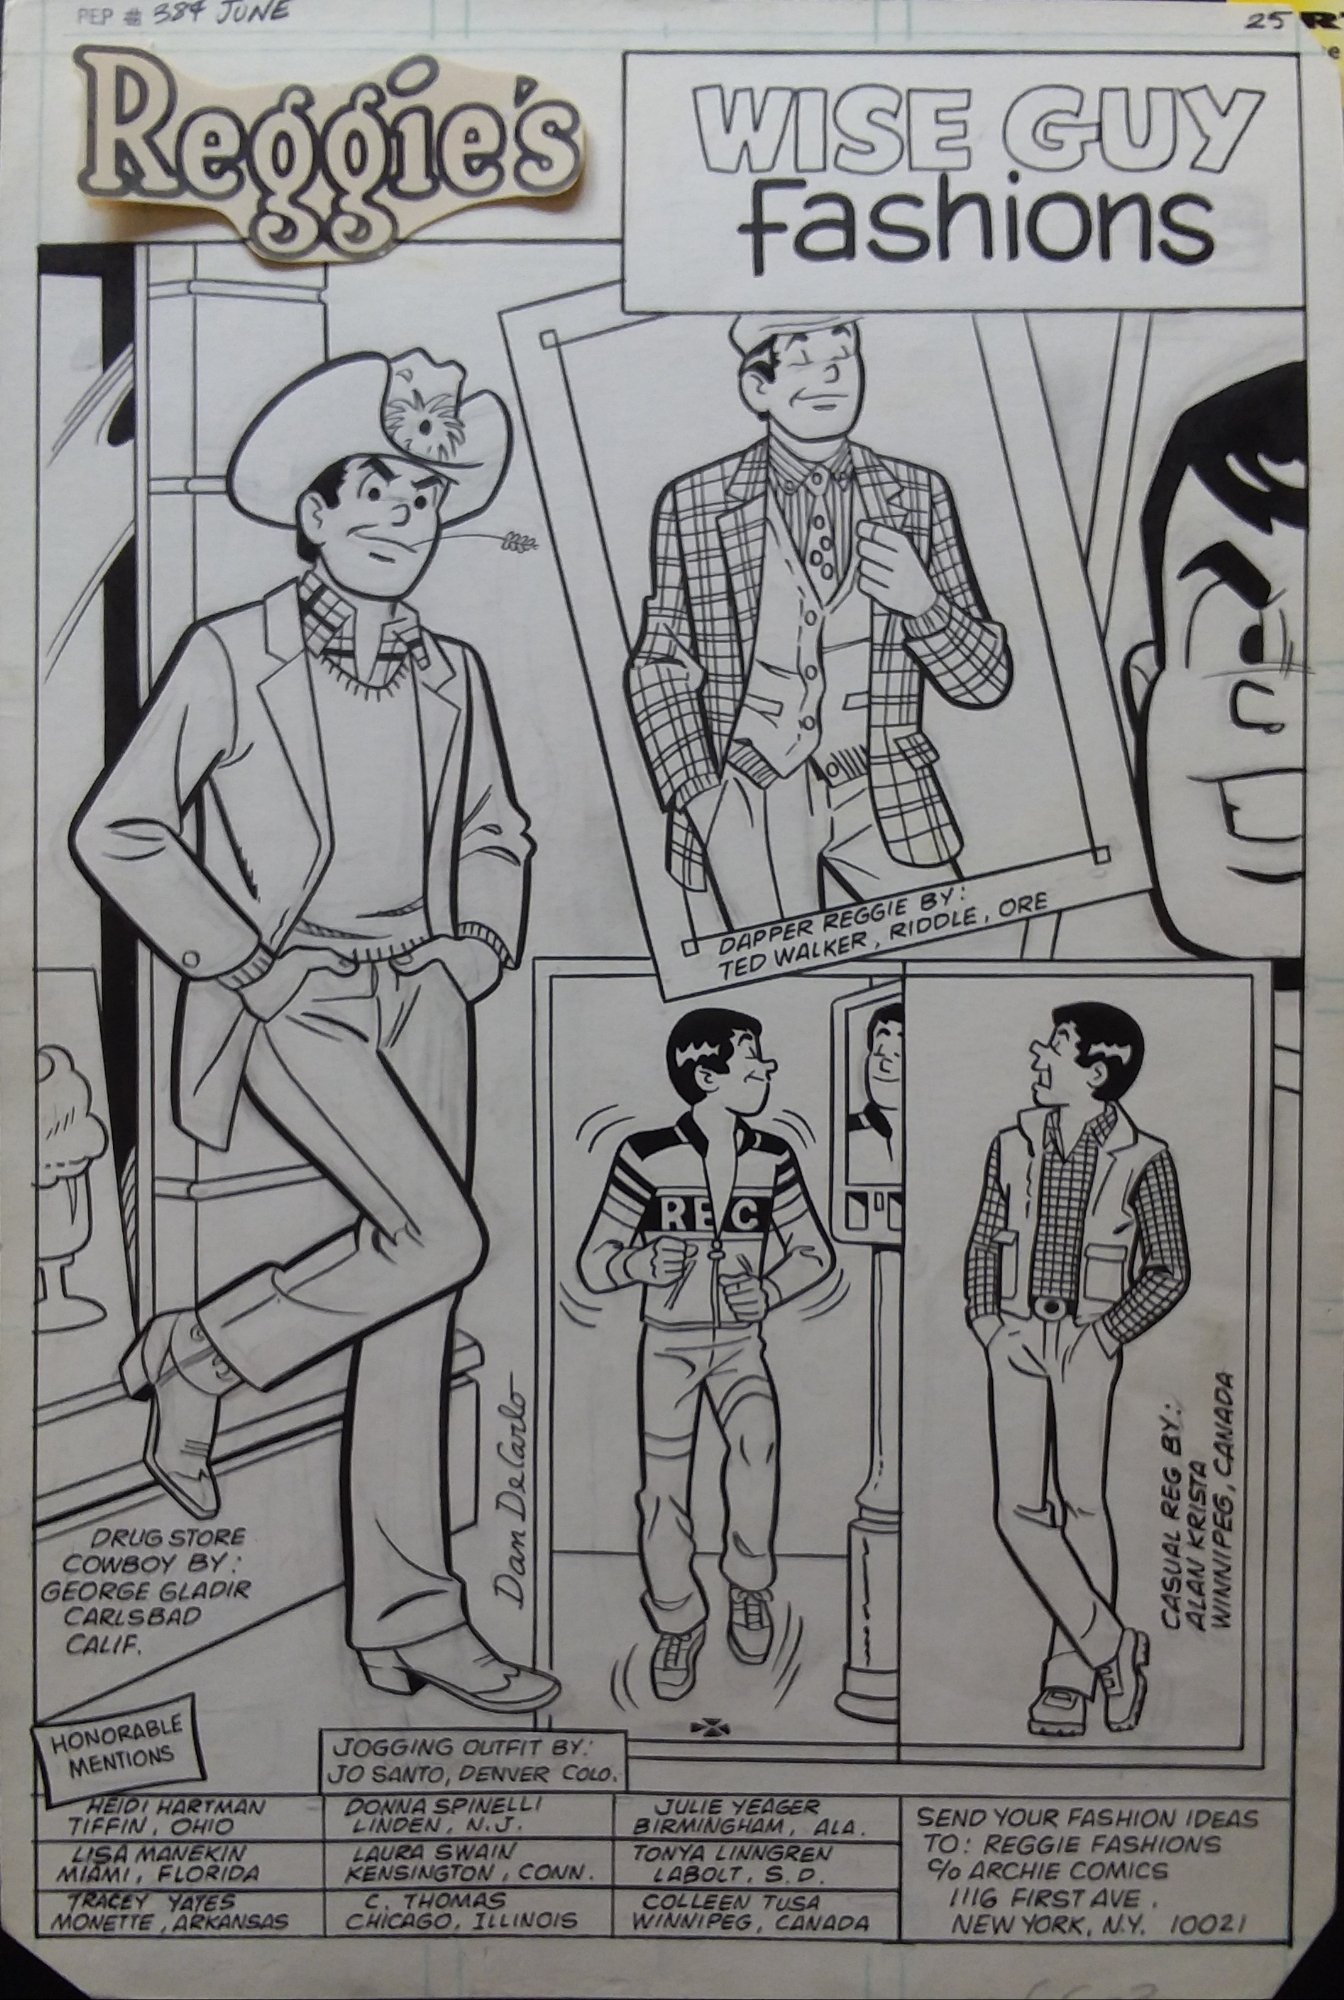 Pep 384 (1982), Reggie pin-up, in Arthur Chertowsky's Archie pin-ups ...